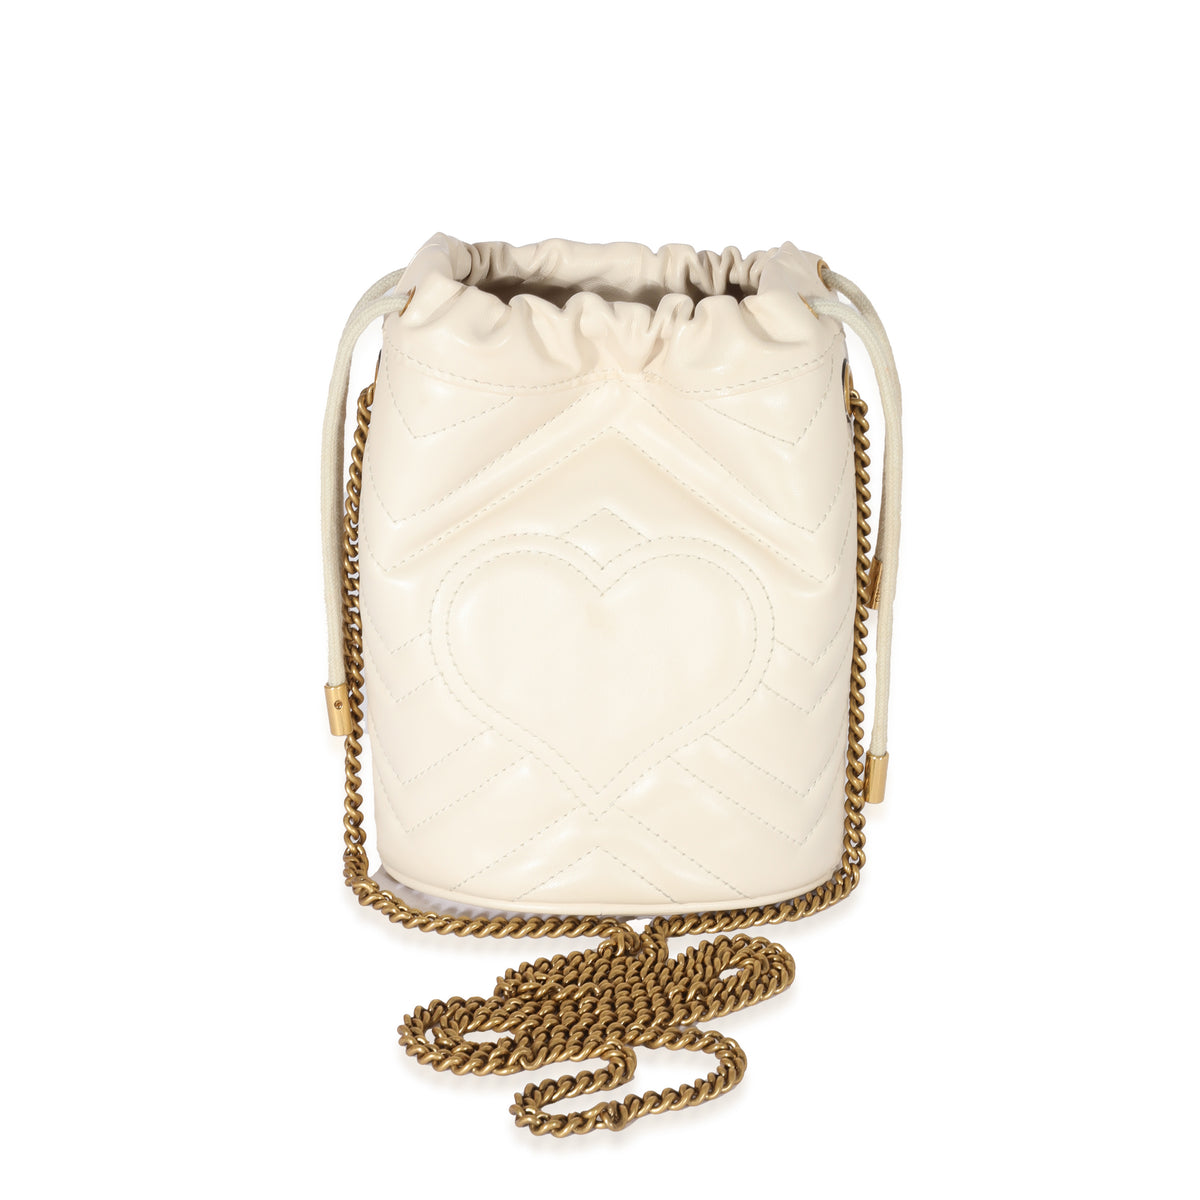 Gucci White Leather GG Marmont Mini Bucket Bag